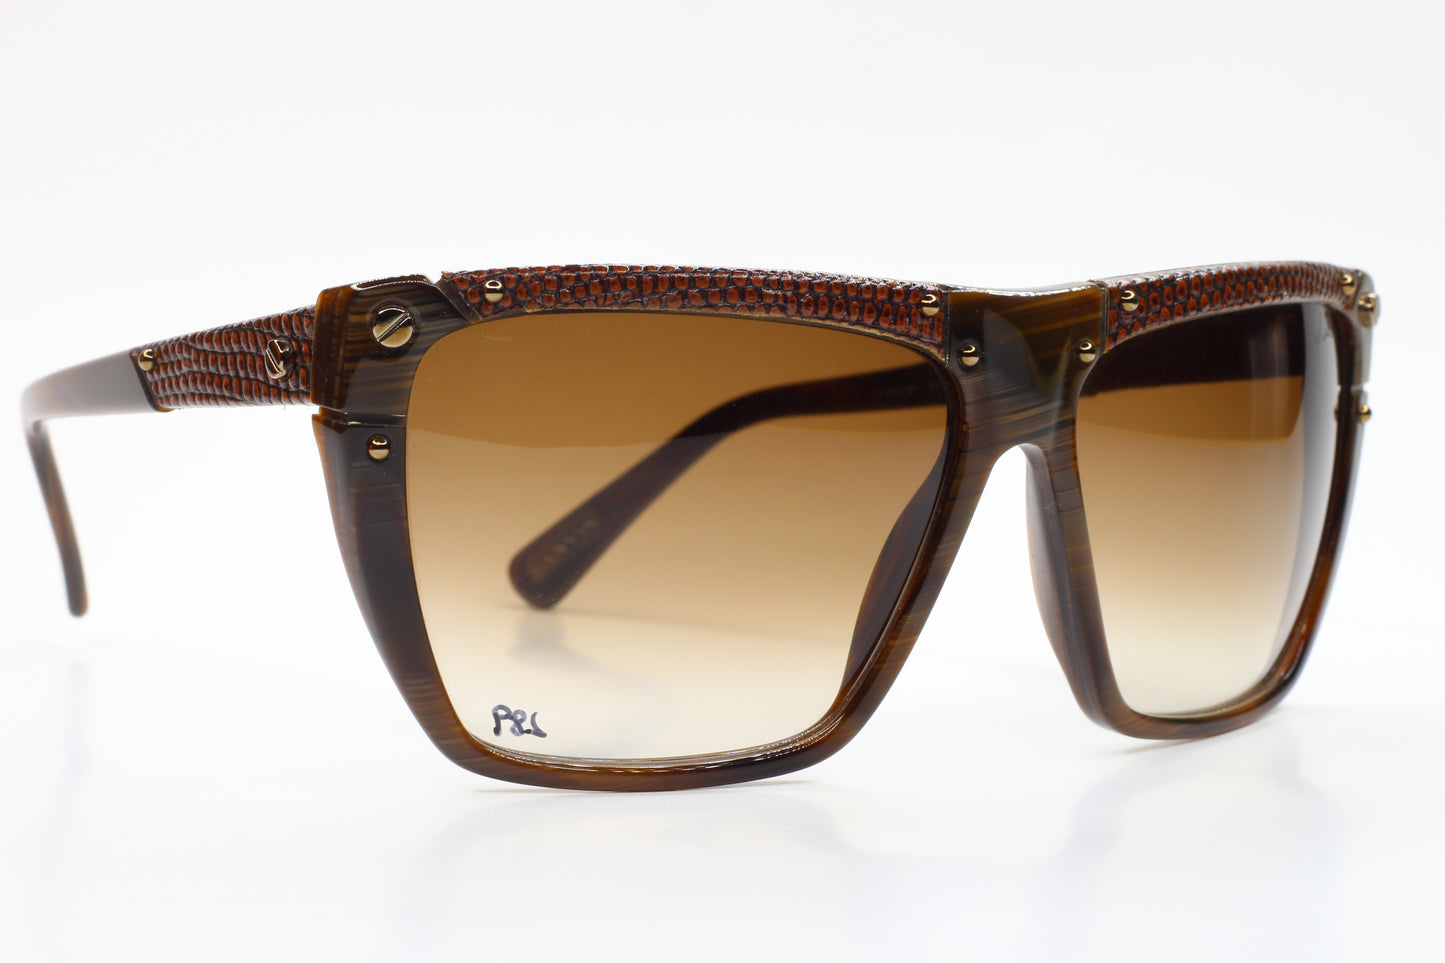 Lanvin SLN501 0G62 Brown-Horn w/Brown Gradient Luxury Sunglasses - sunglasses, Women